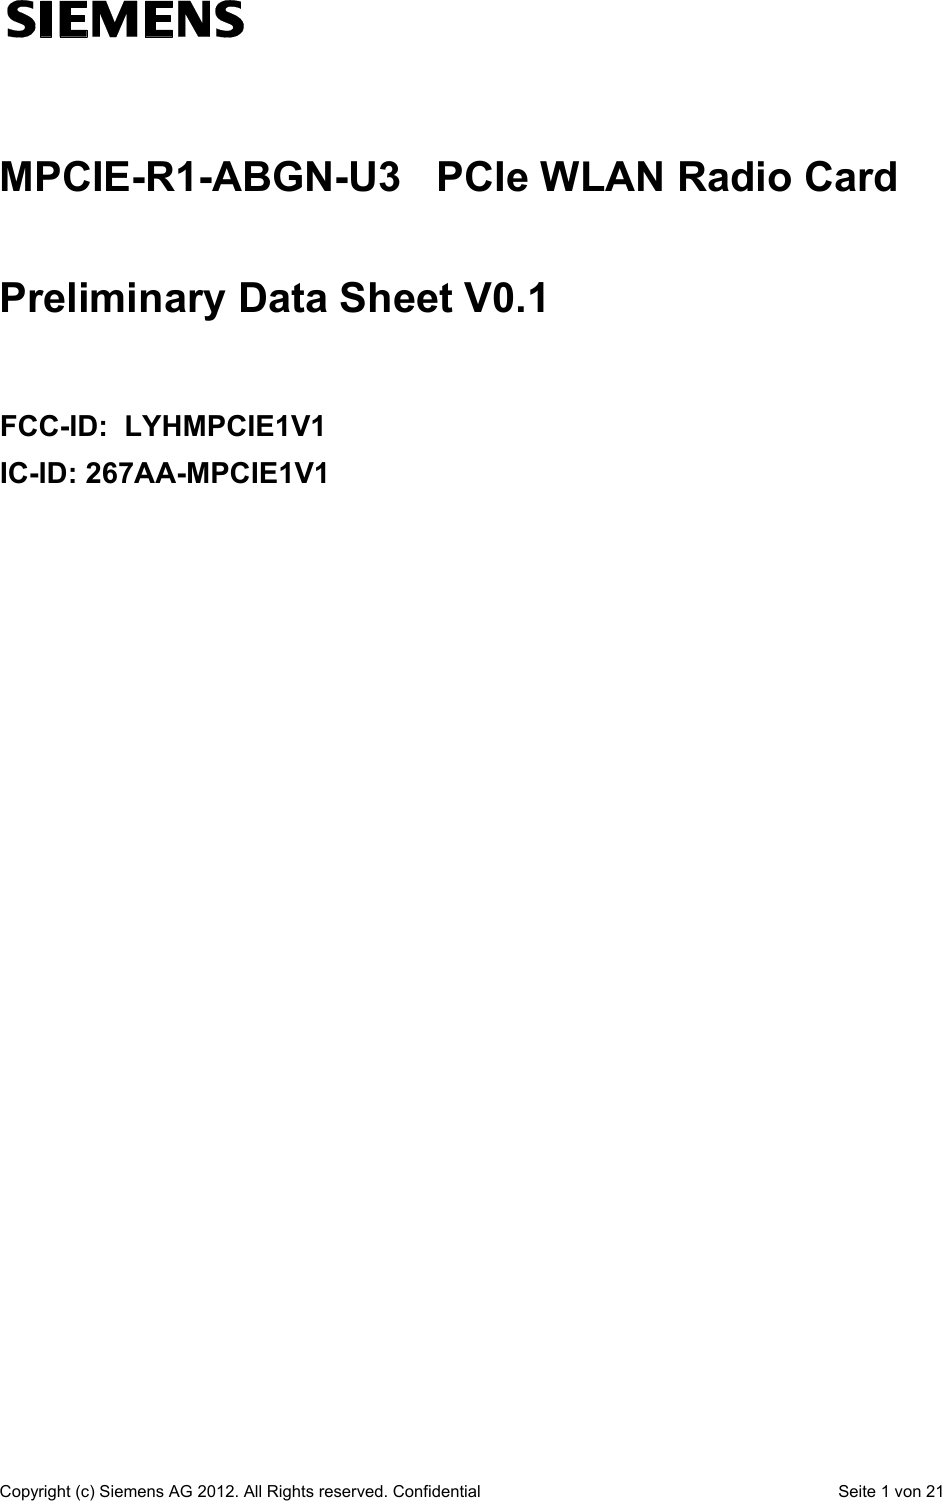    Copyright (c) Siemens AG 2012. All Rights reserved. Confidential  Seite 1 von 21    MPCIE-R1-ABGN-U3   PCIe WLAN Radio Card  Preliminary Data Sheet V0.1  FCC-ID:  LYHMPCIE1V1 IC-ID: 267AA-MPCIE1V1  